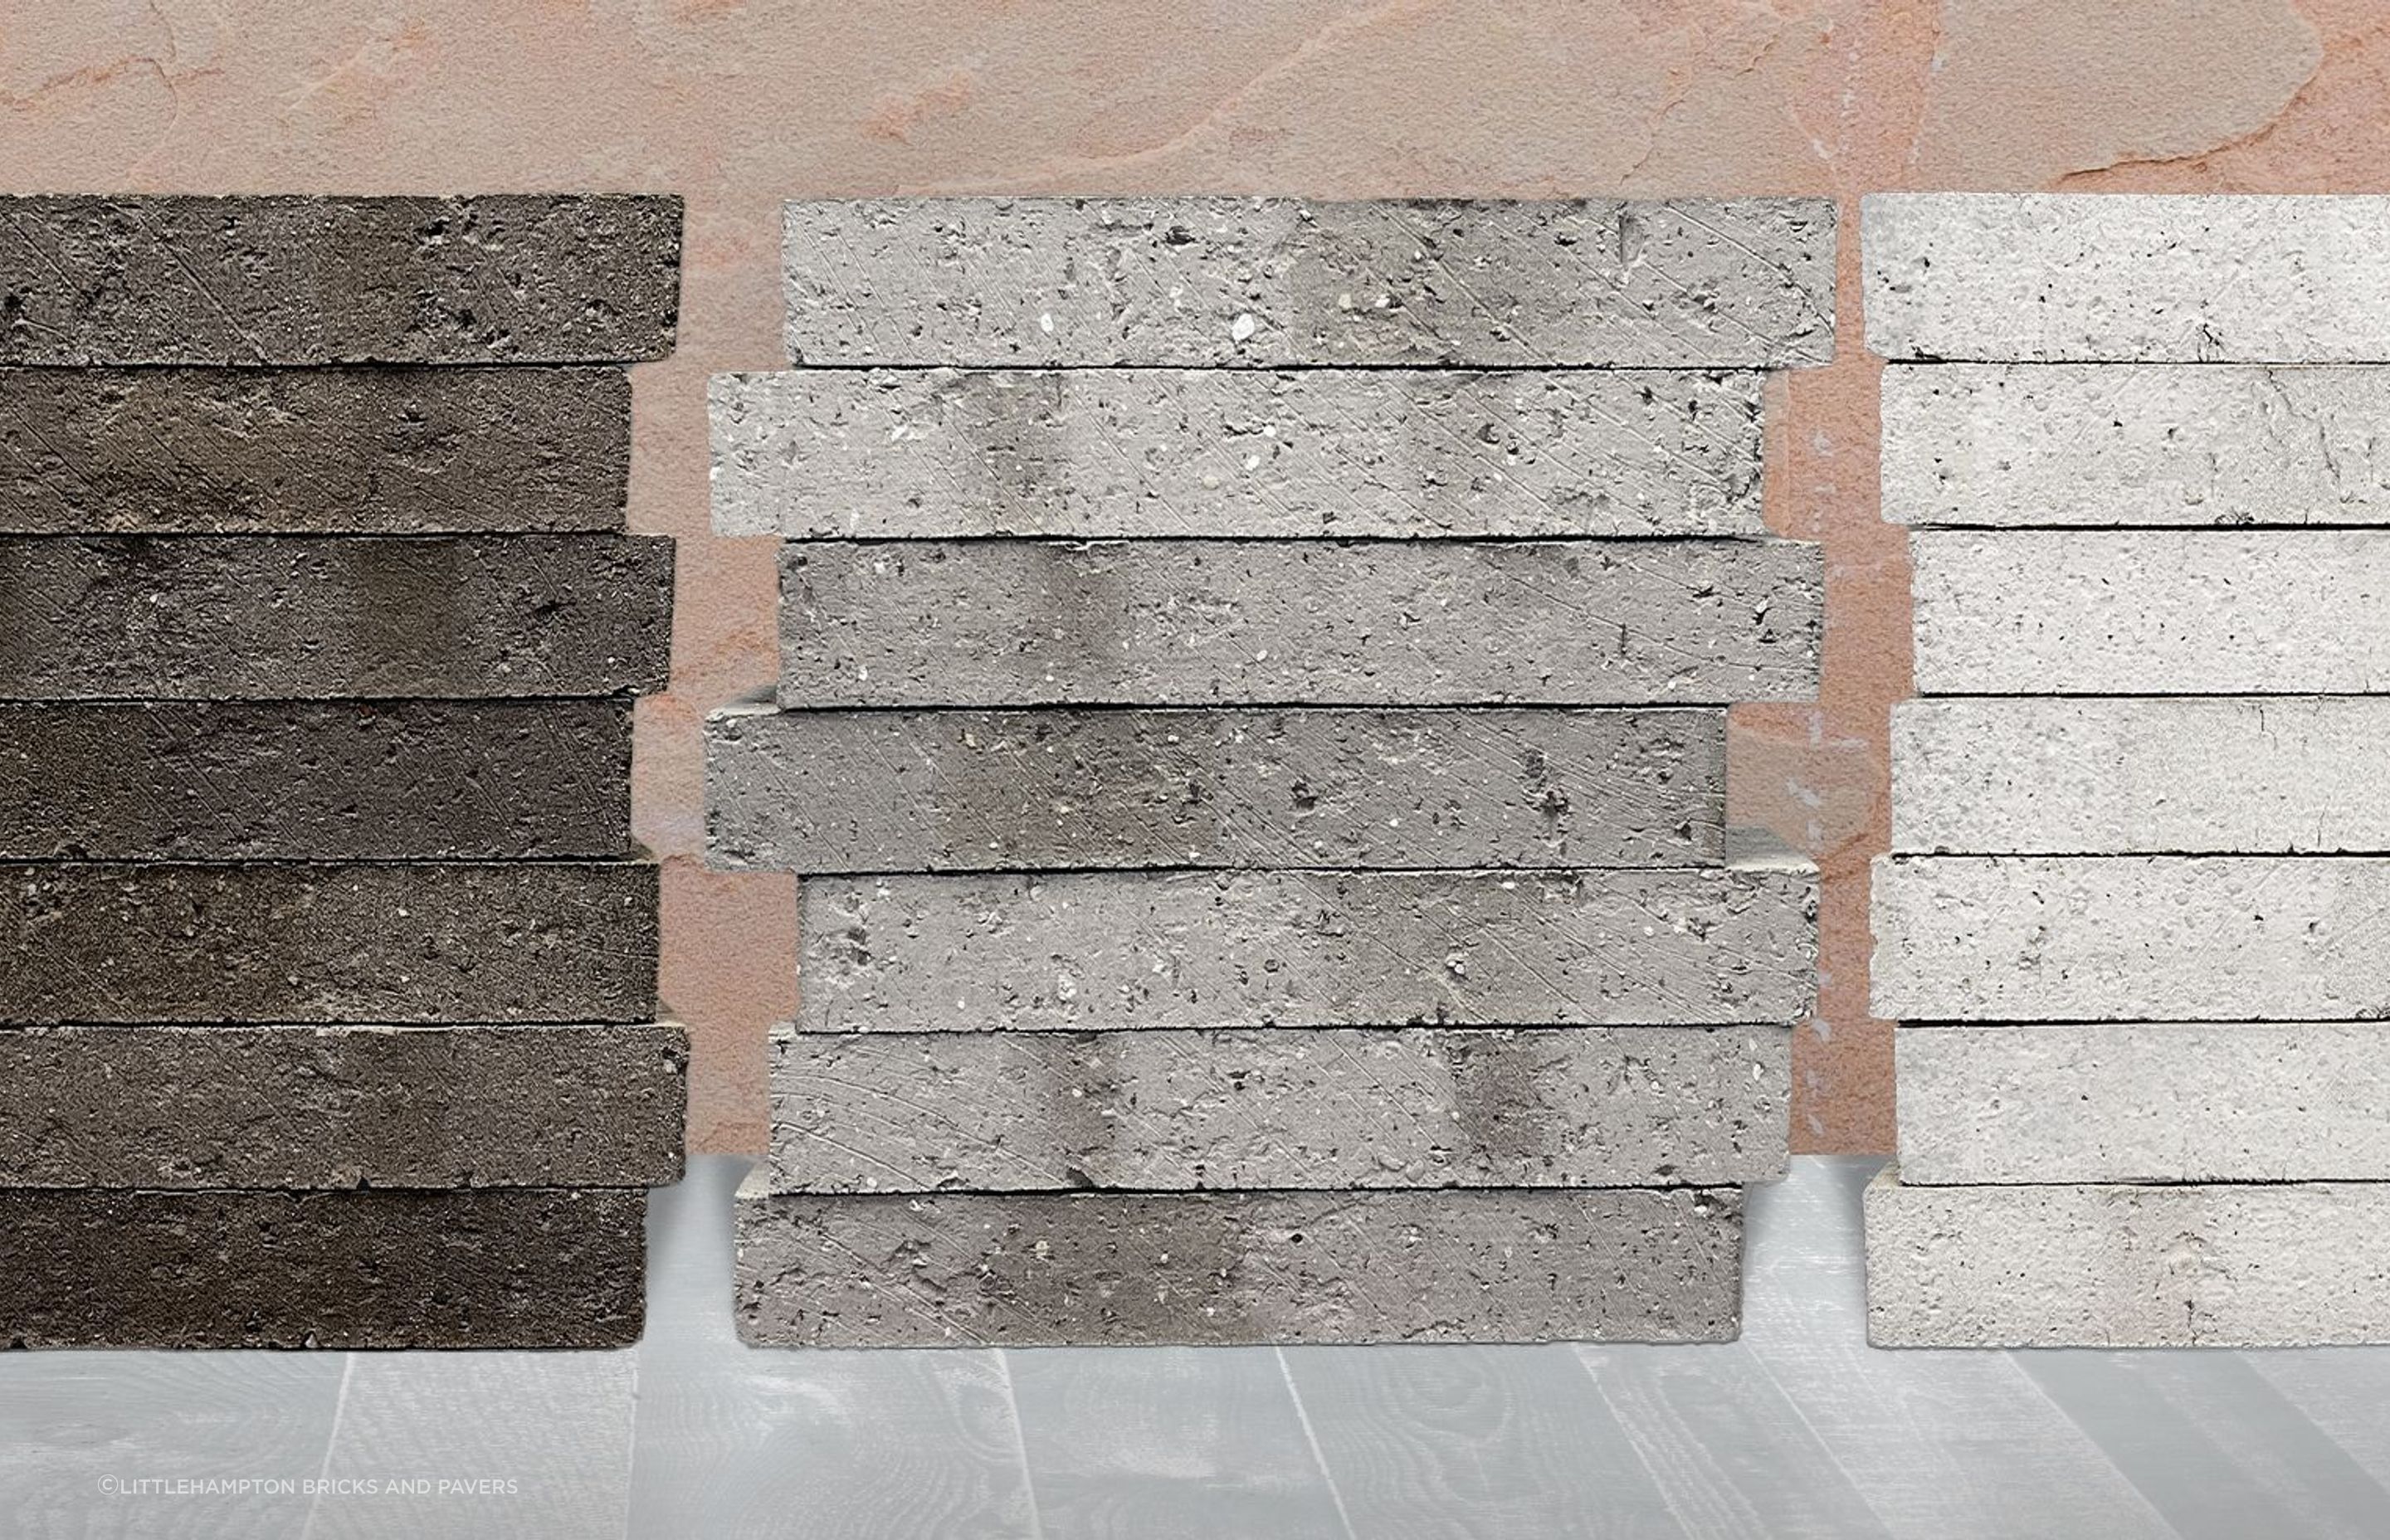 The Milan Series of long bricks by Littlehampton Bricks